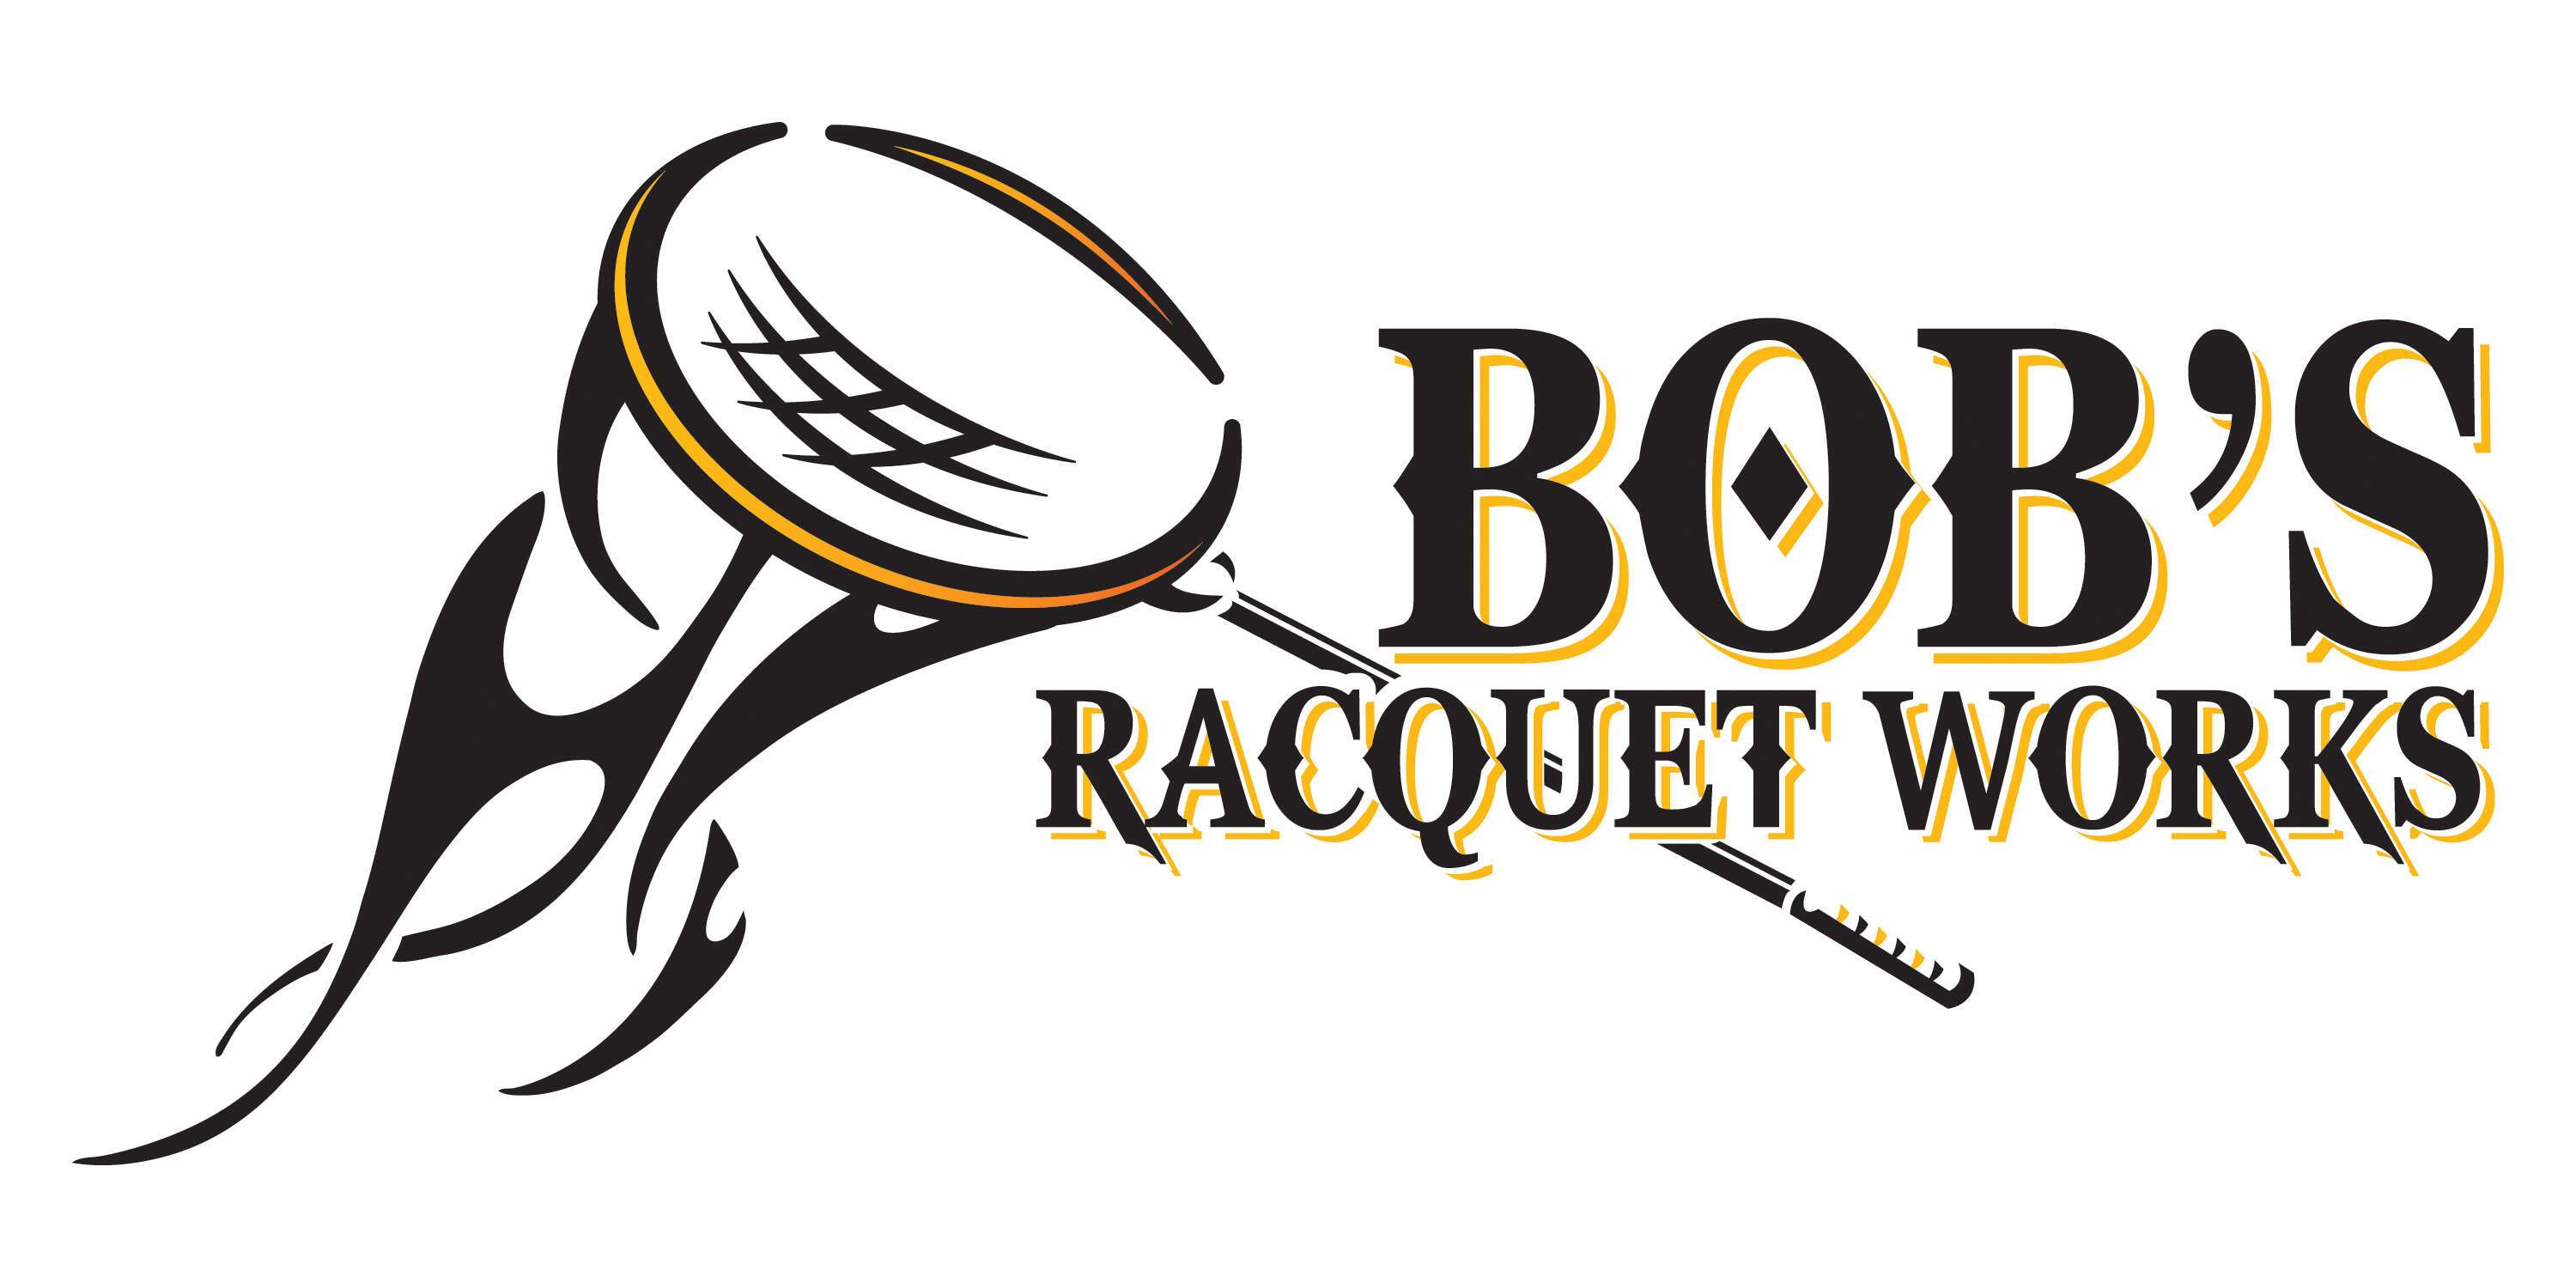 Bob's Racquet Works